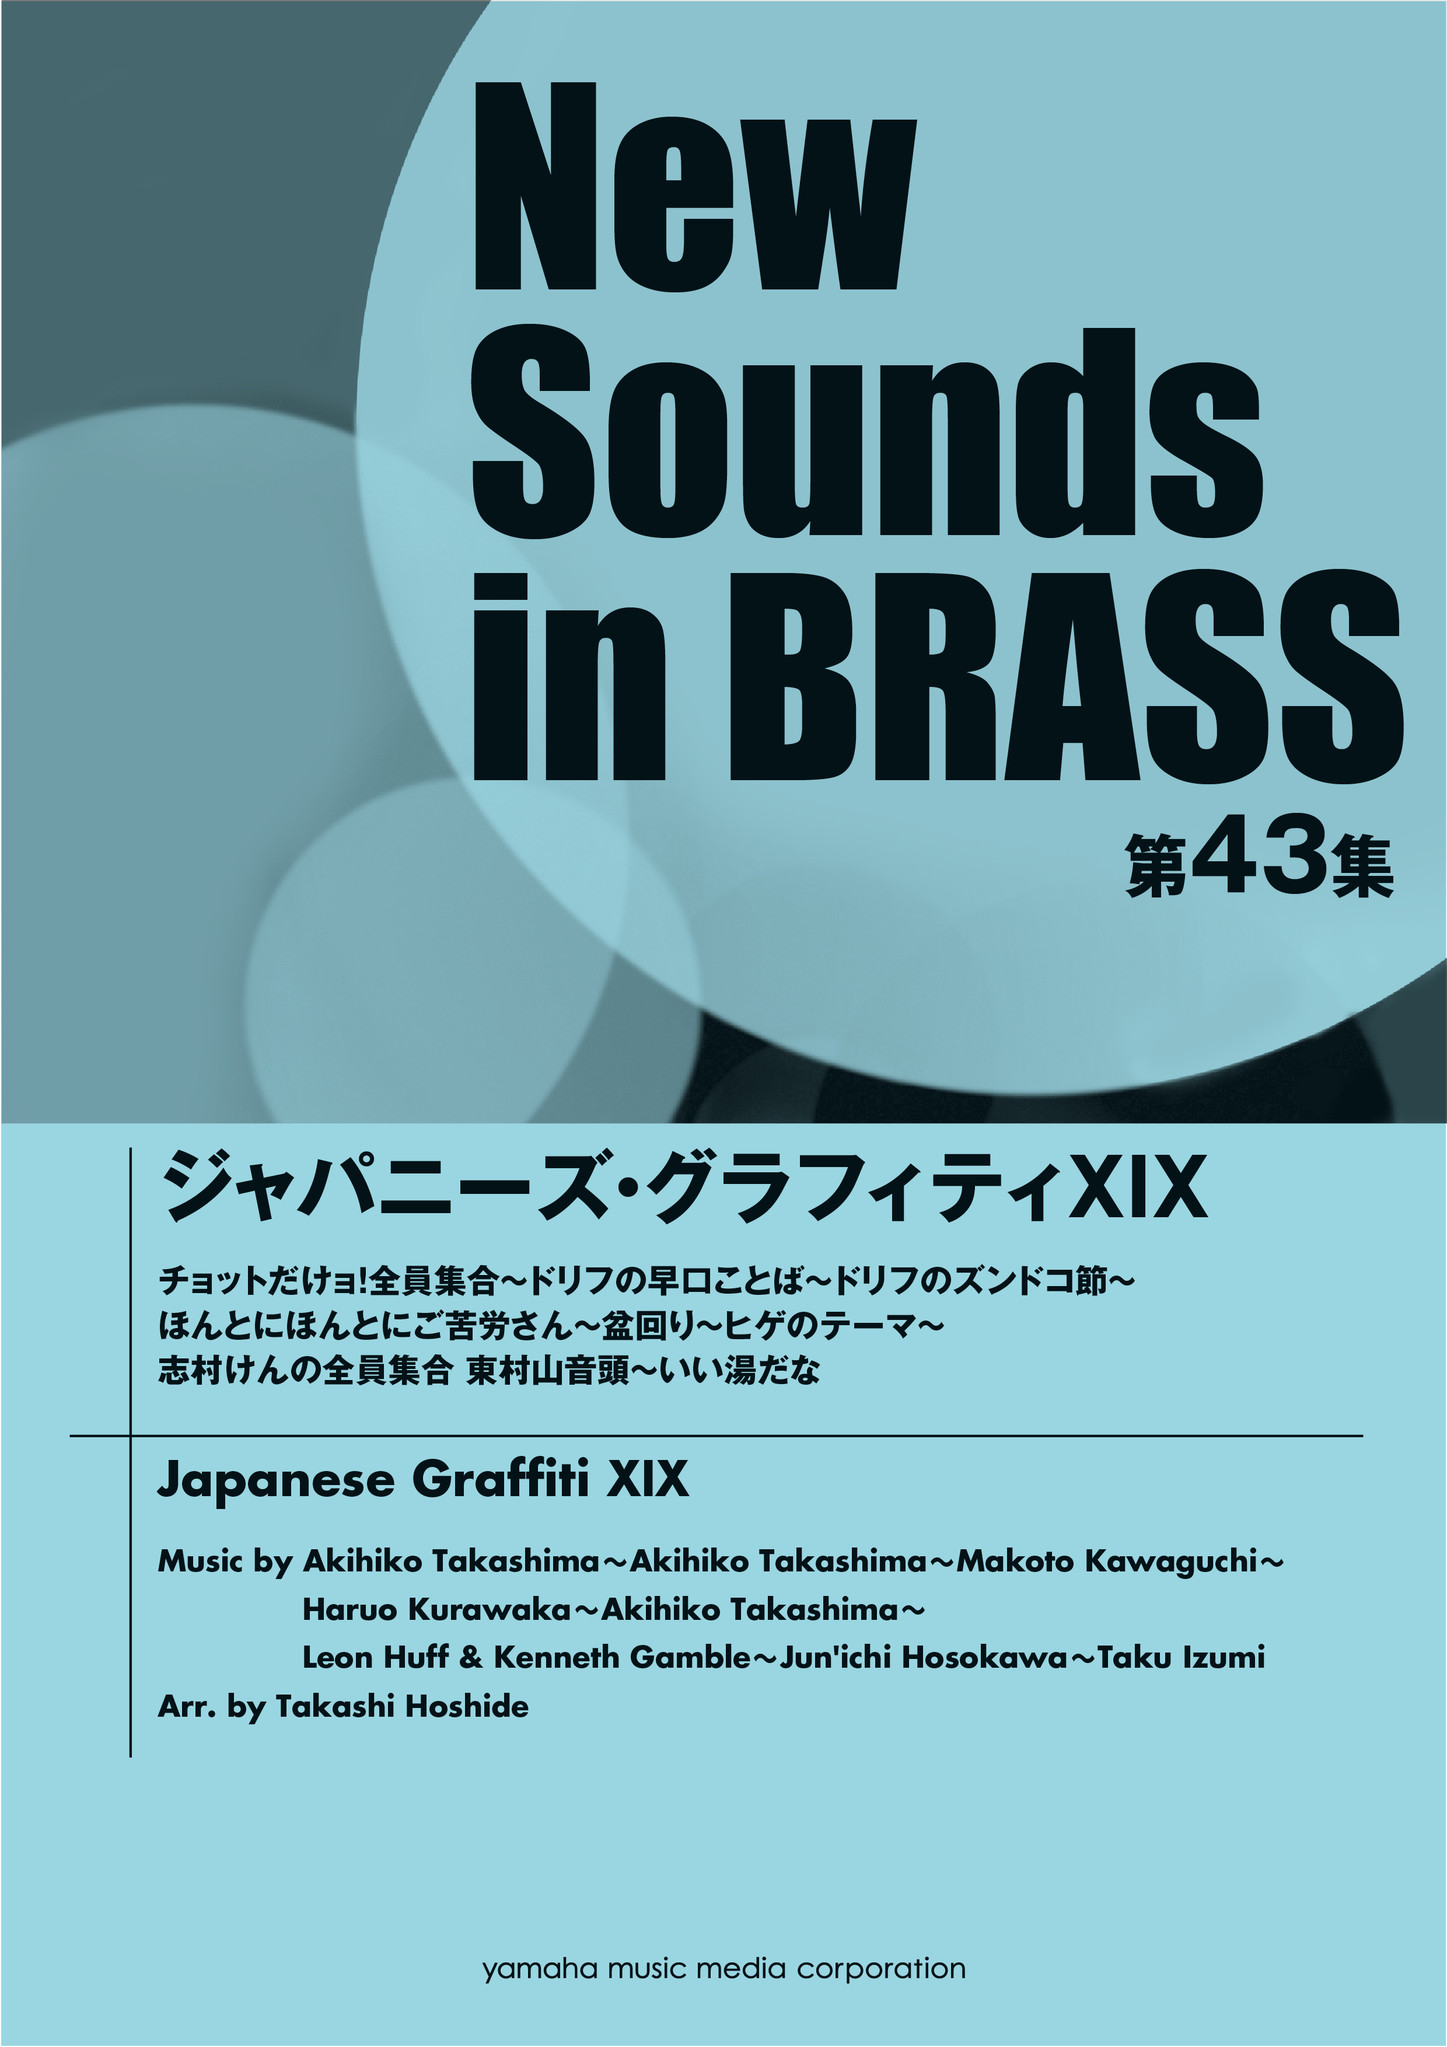 New Sounds In Brass 第43集7月29日発売 ヤマハミュージックエンタテインメントホールディングスのプレスリリース